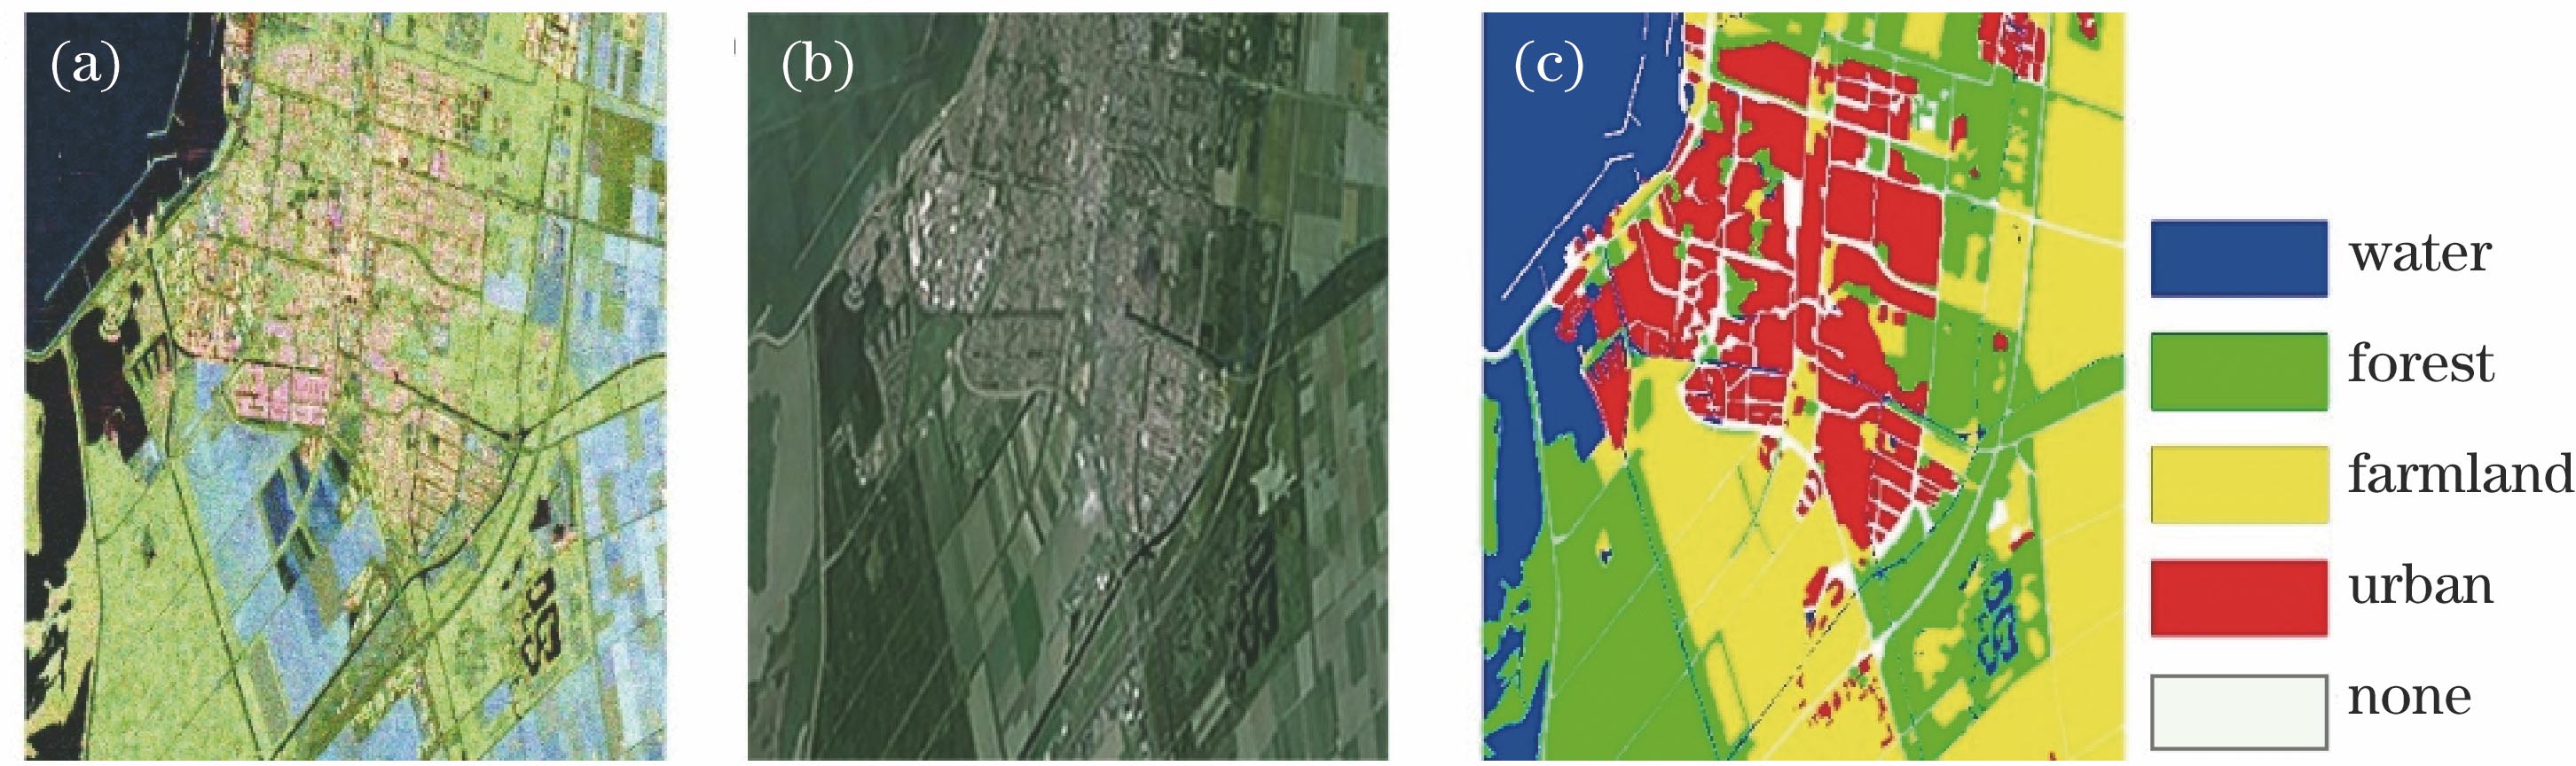 Polarimetric SAR images from Radarsat-2 in Flevoland. (a) Pauli pseudo color image; (b) corresponding map; (c) ground truth